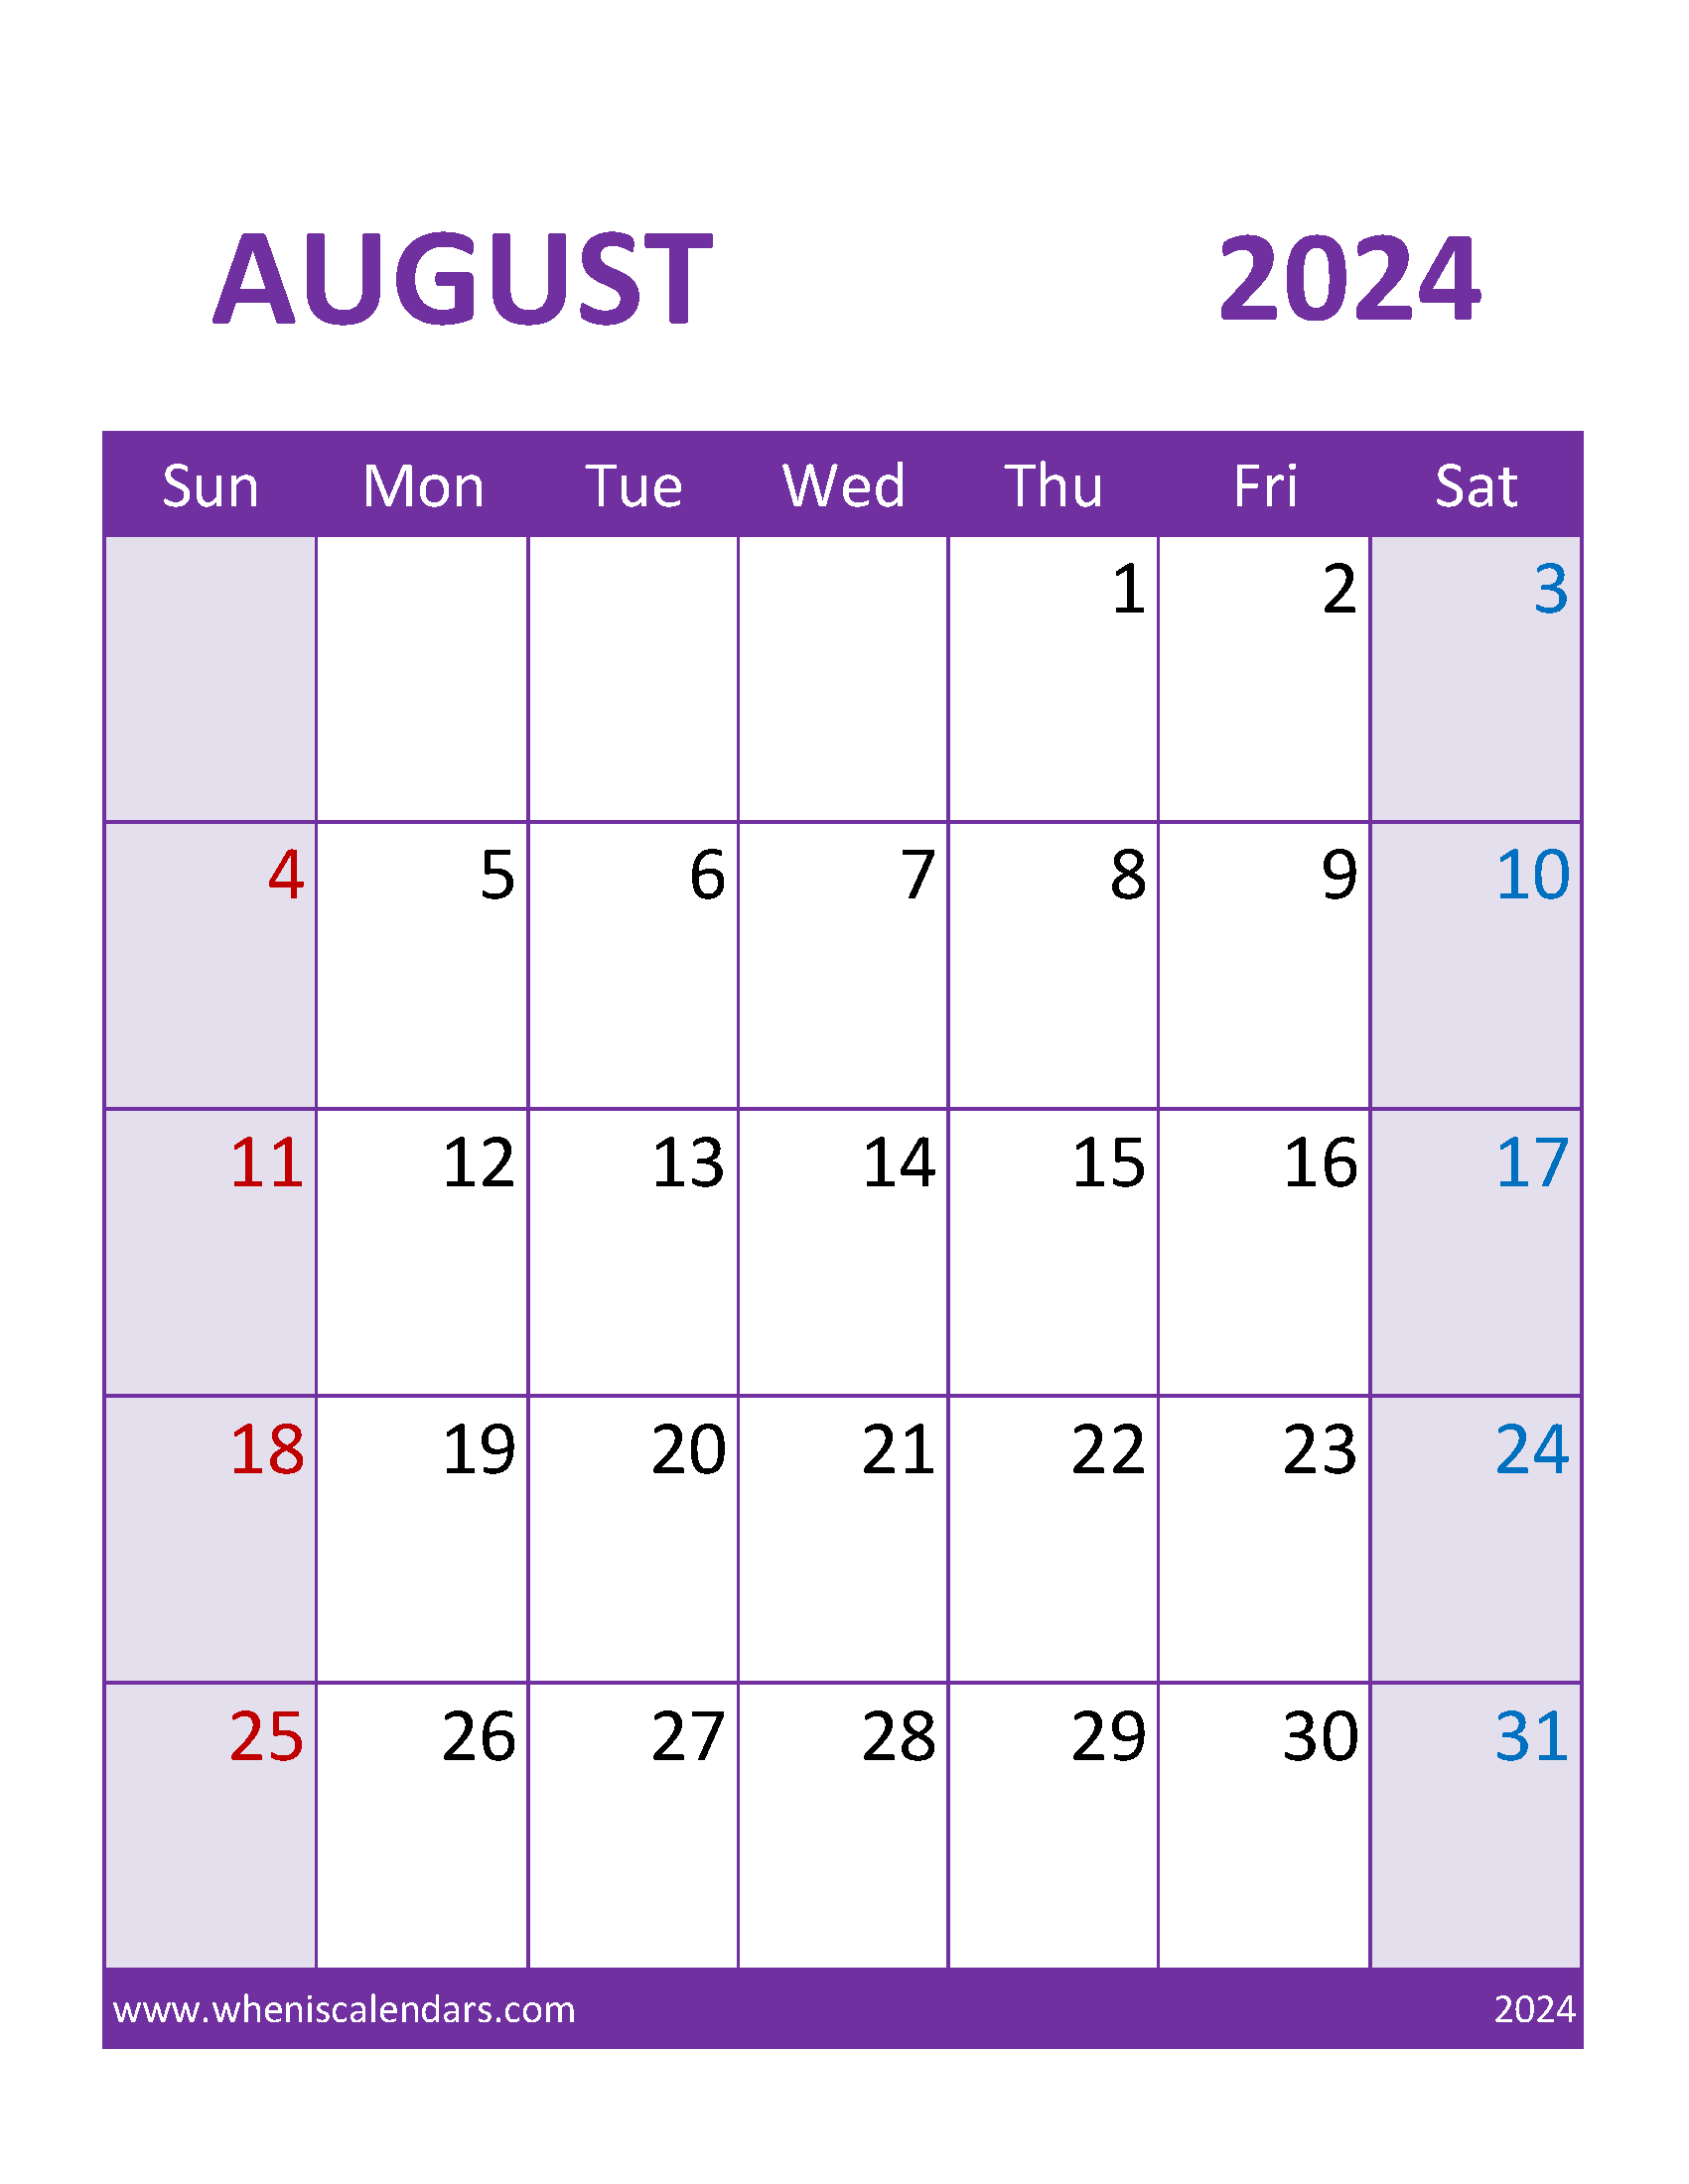 August 2024 Calendar Print out